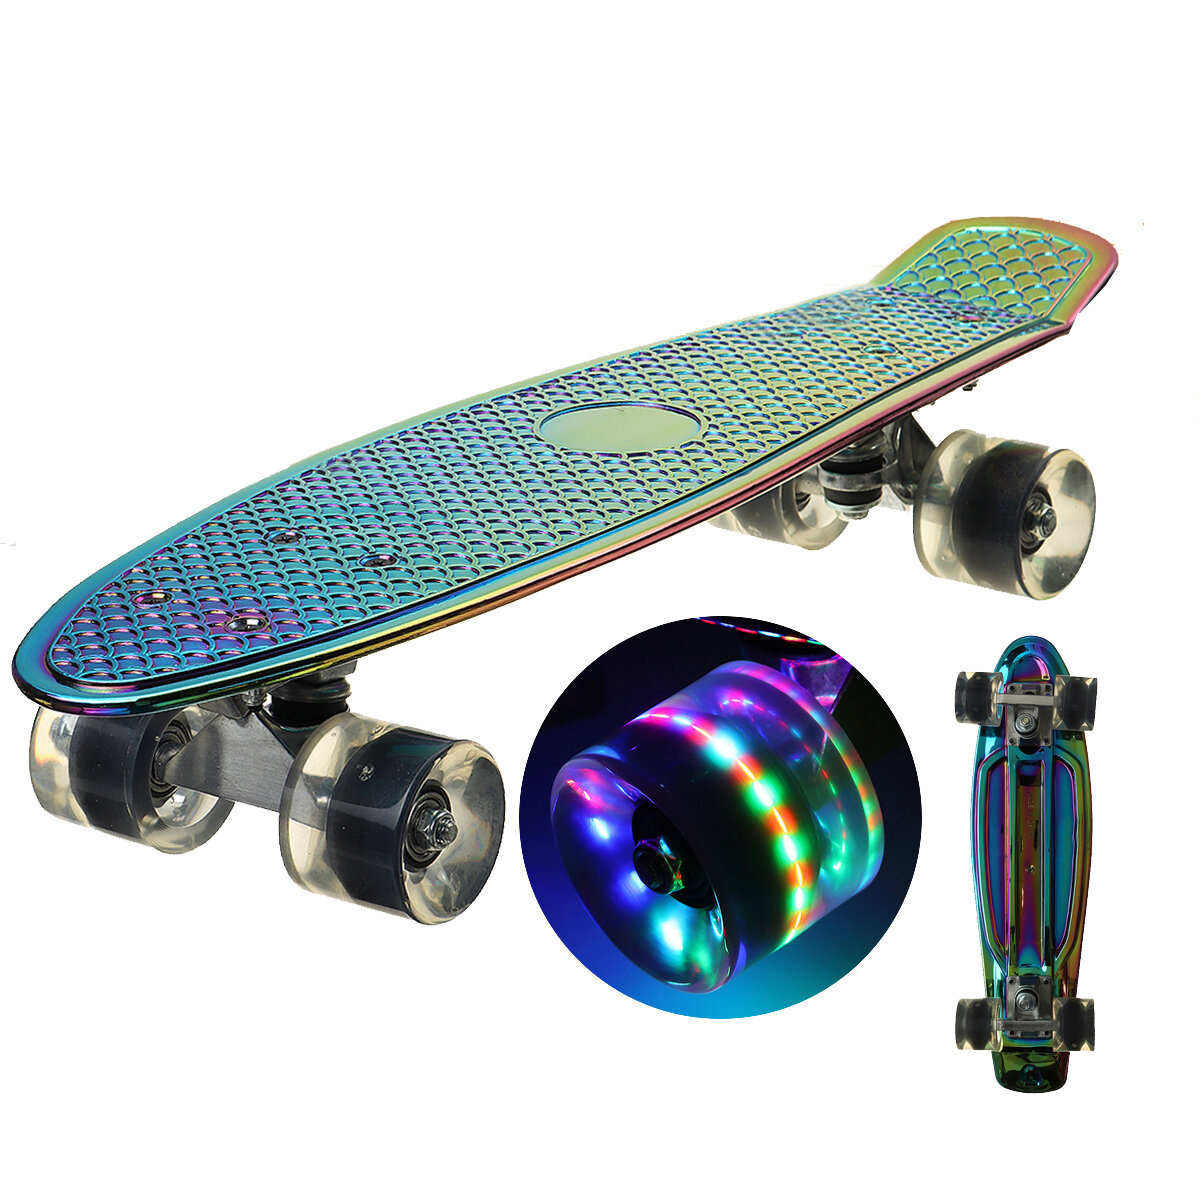 

22 дюймов Skate Board Flash LED Колеса Mini Cruiser Скейтборд Процесс гальваники Longboard Street На открытом воздухе Sp